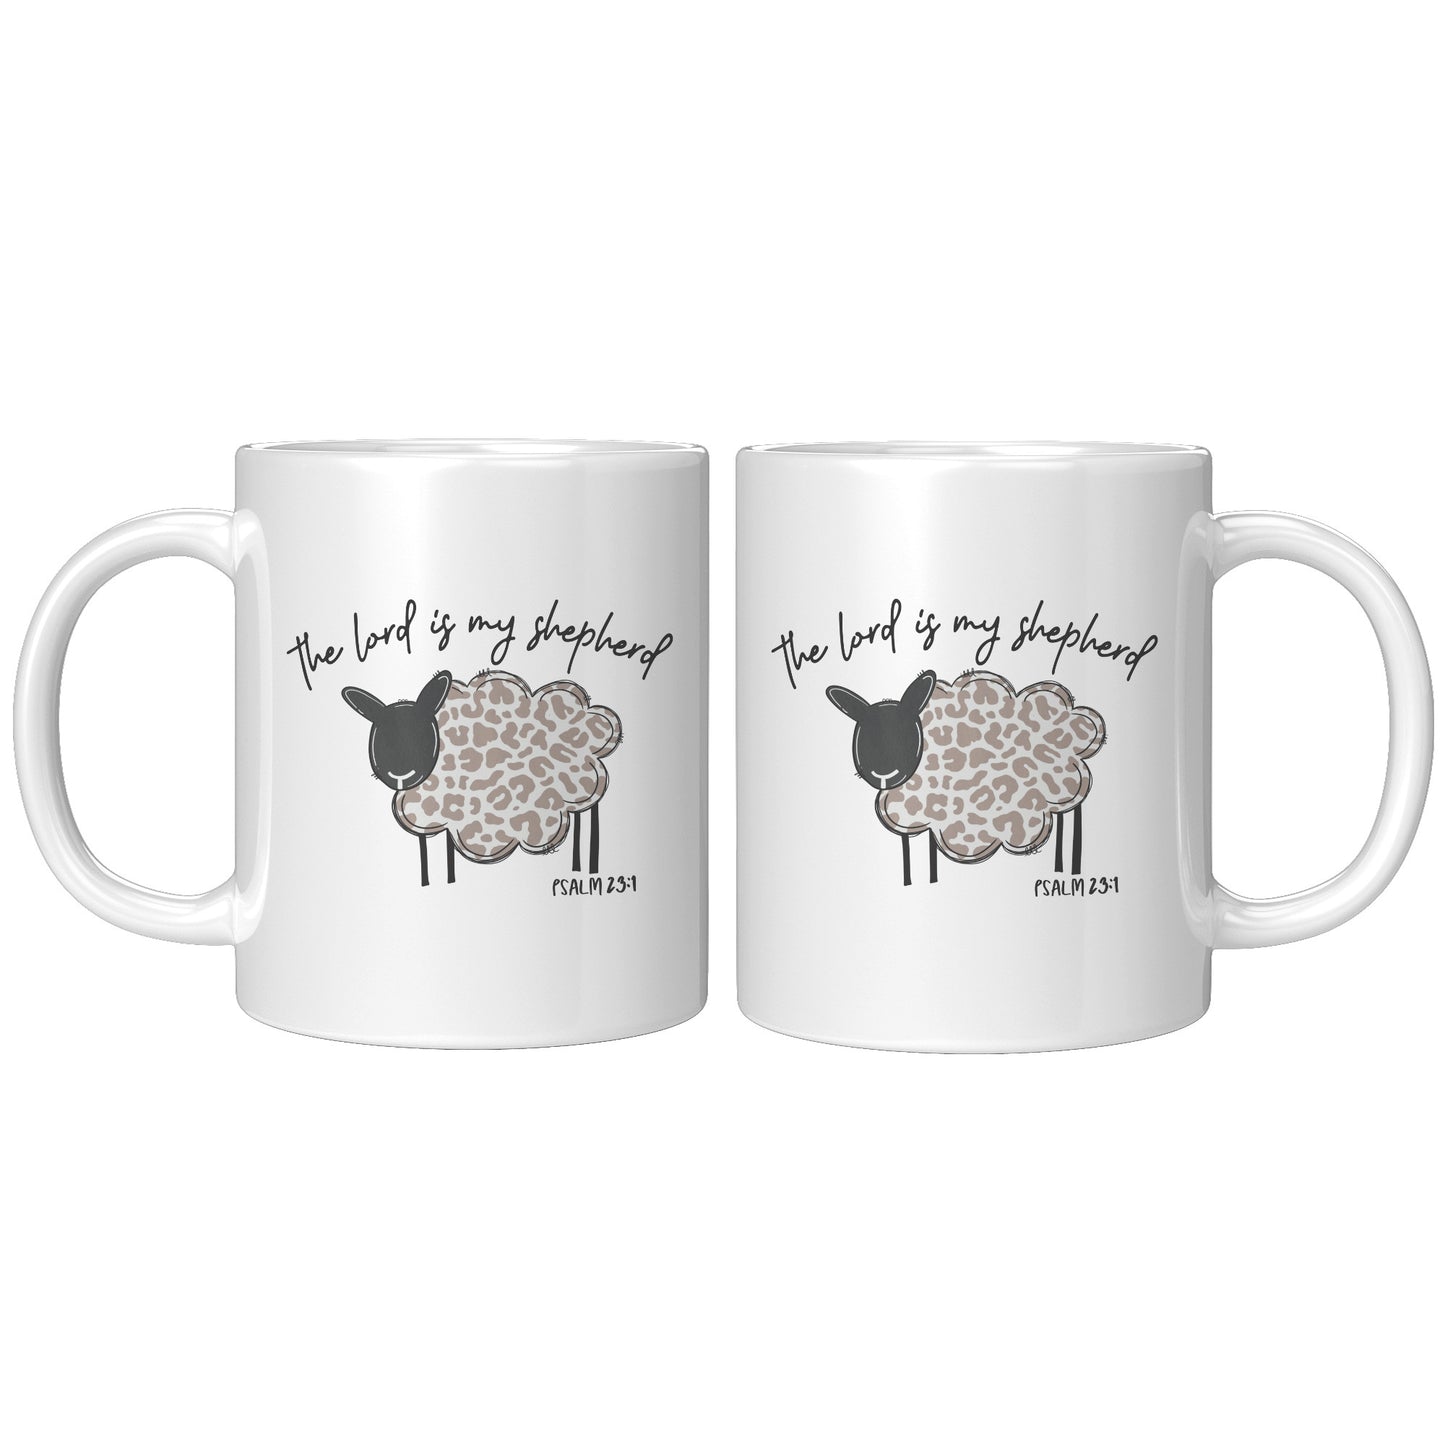 The Lord Is My Shepherd Coffee Mug